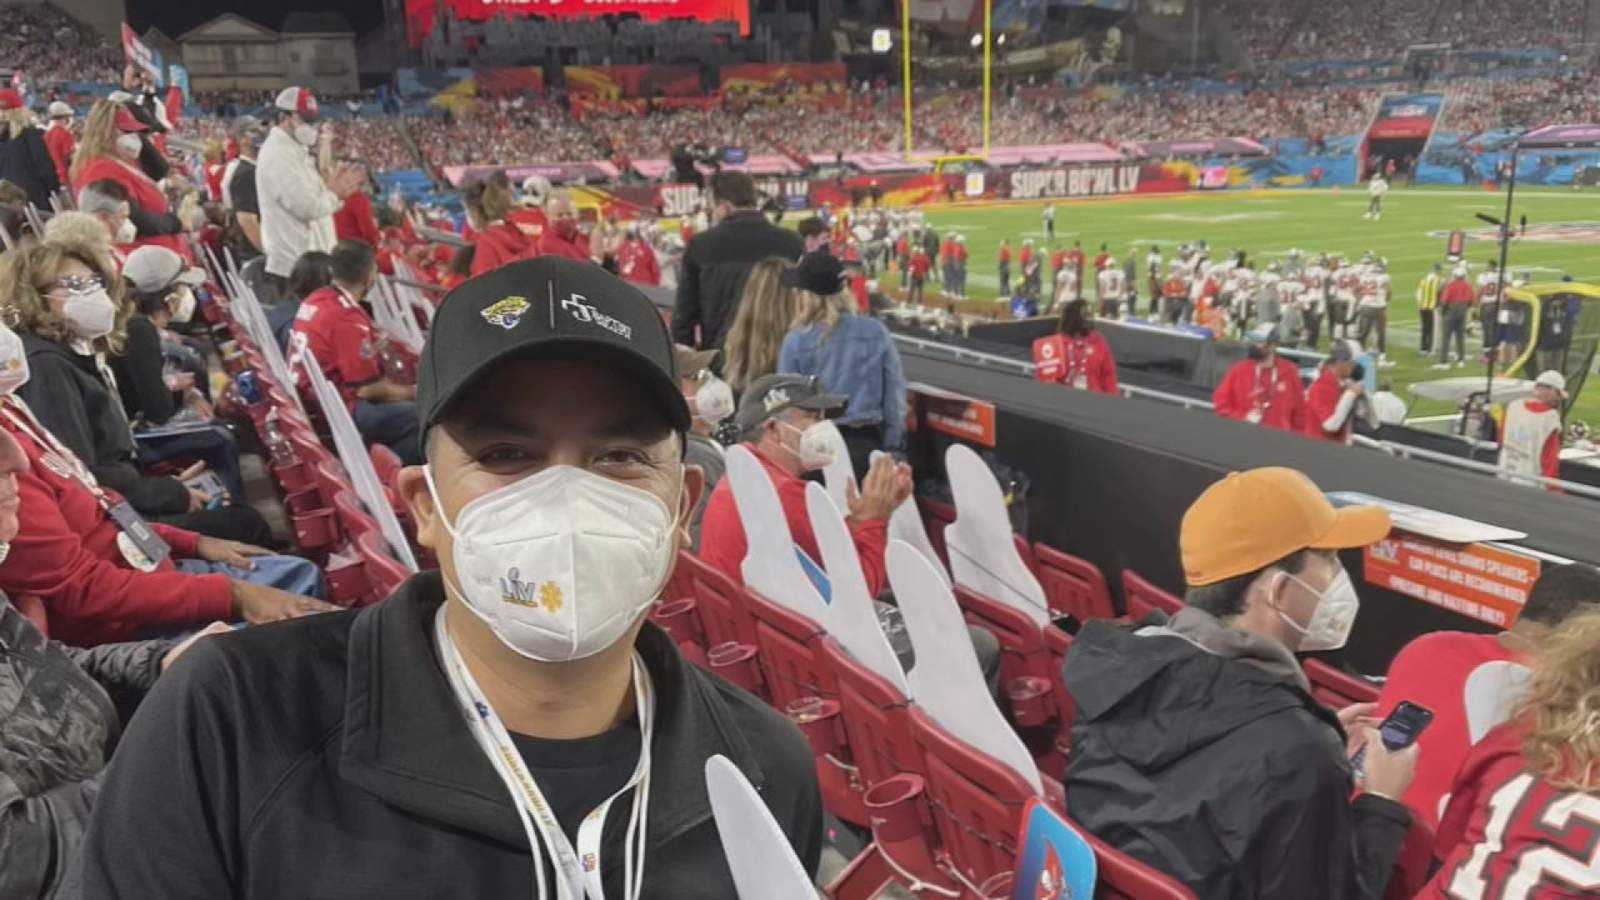 Jacksonville frontline workers return from ‘bucket list’ Super Bowl trip amid pandemic